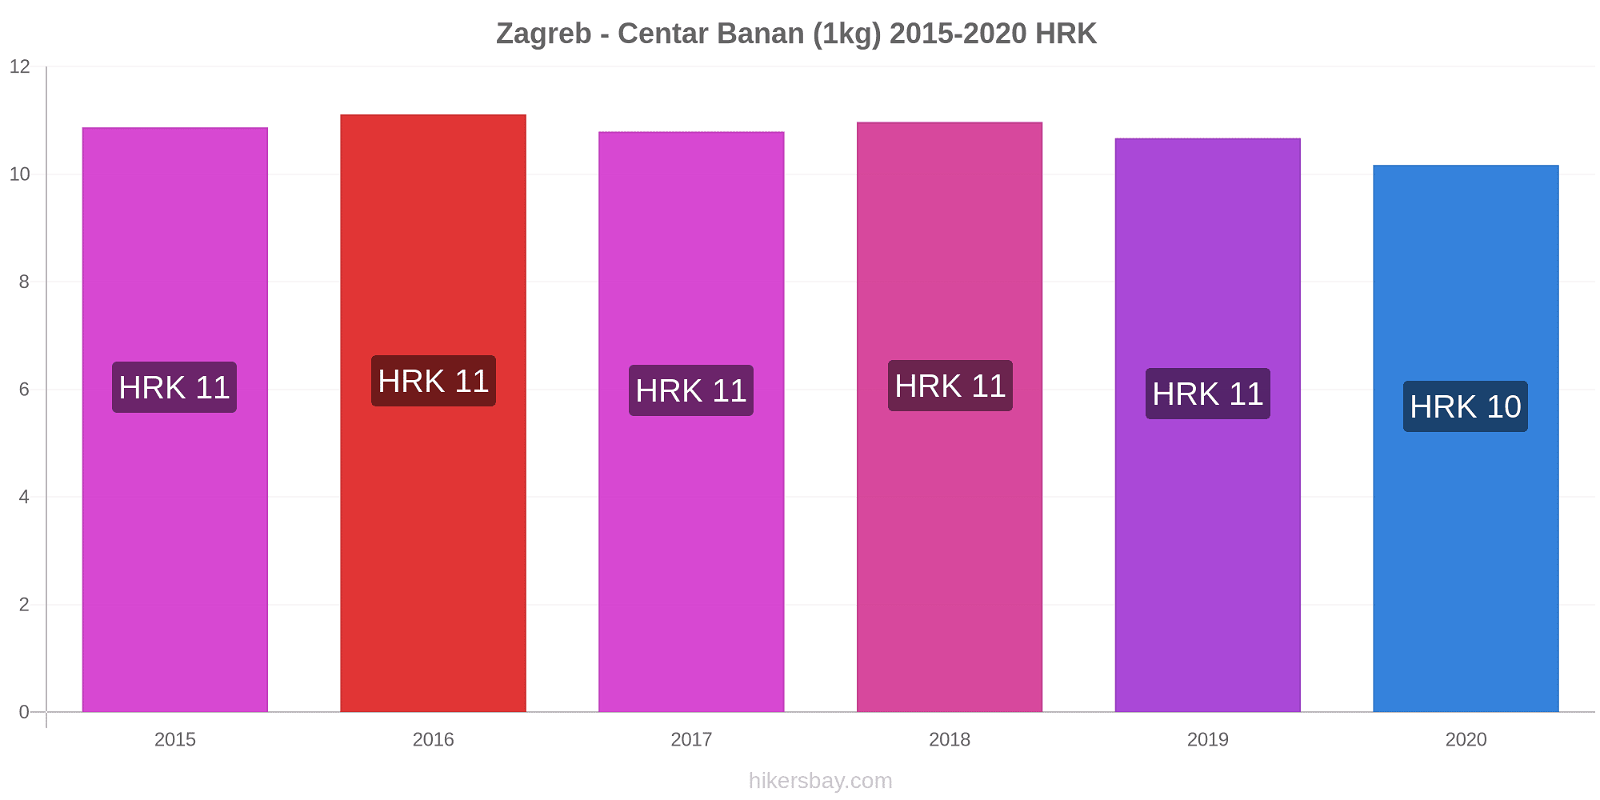 Zagreb - Centar prisendringer Banan (1kg) hikersbay.com